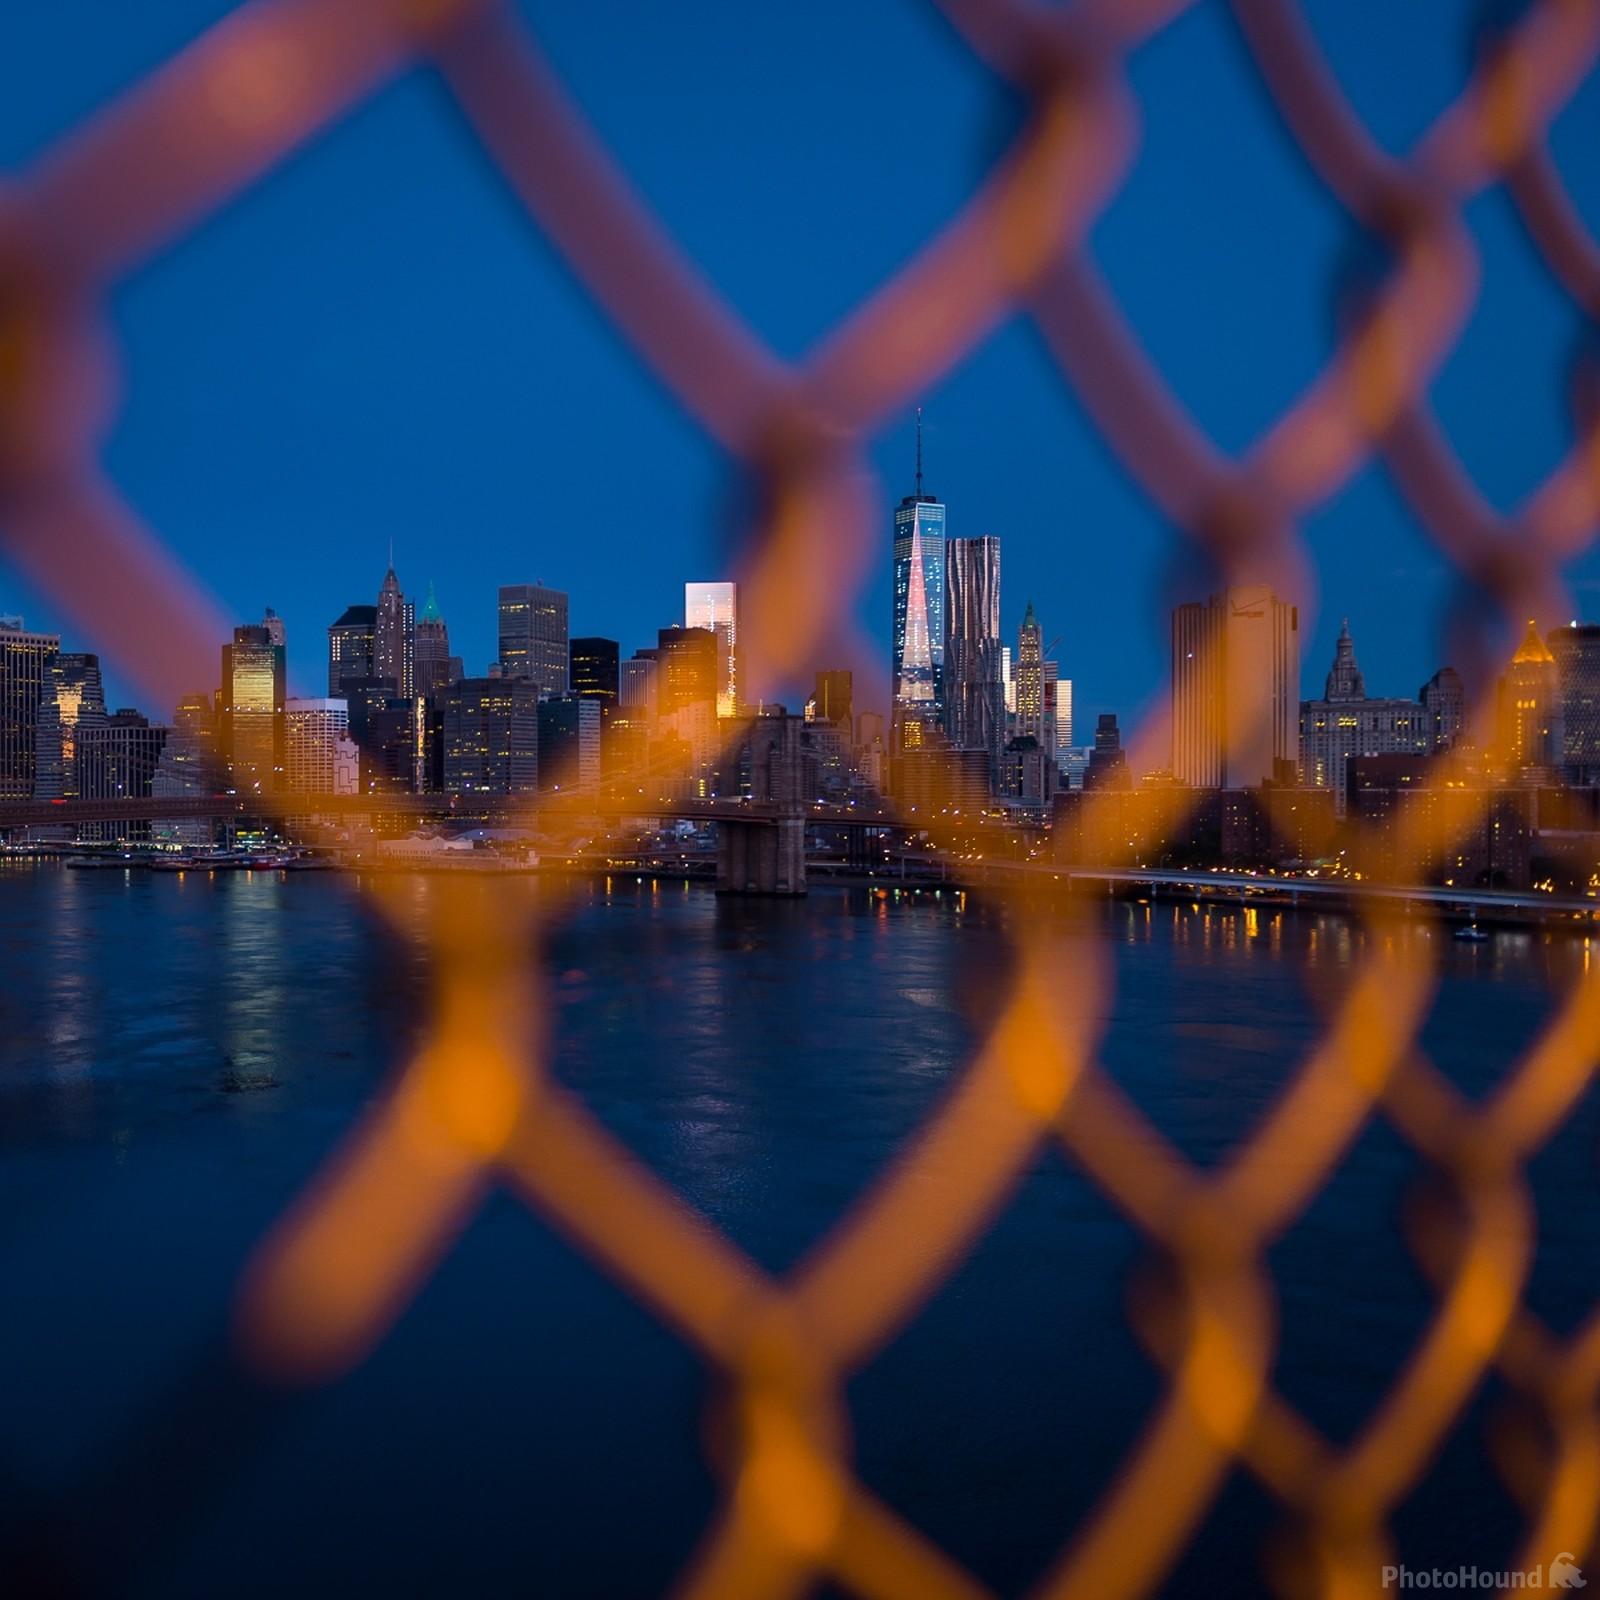 Image of Brooklyn Bridge and Lower Manhattan from the Manhattan Bridge by VOJTa Herout